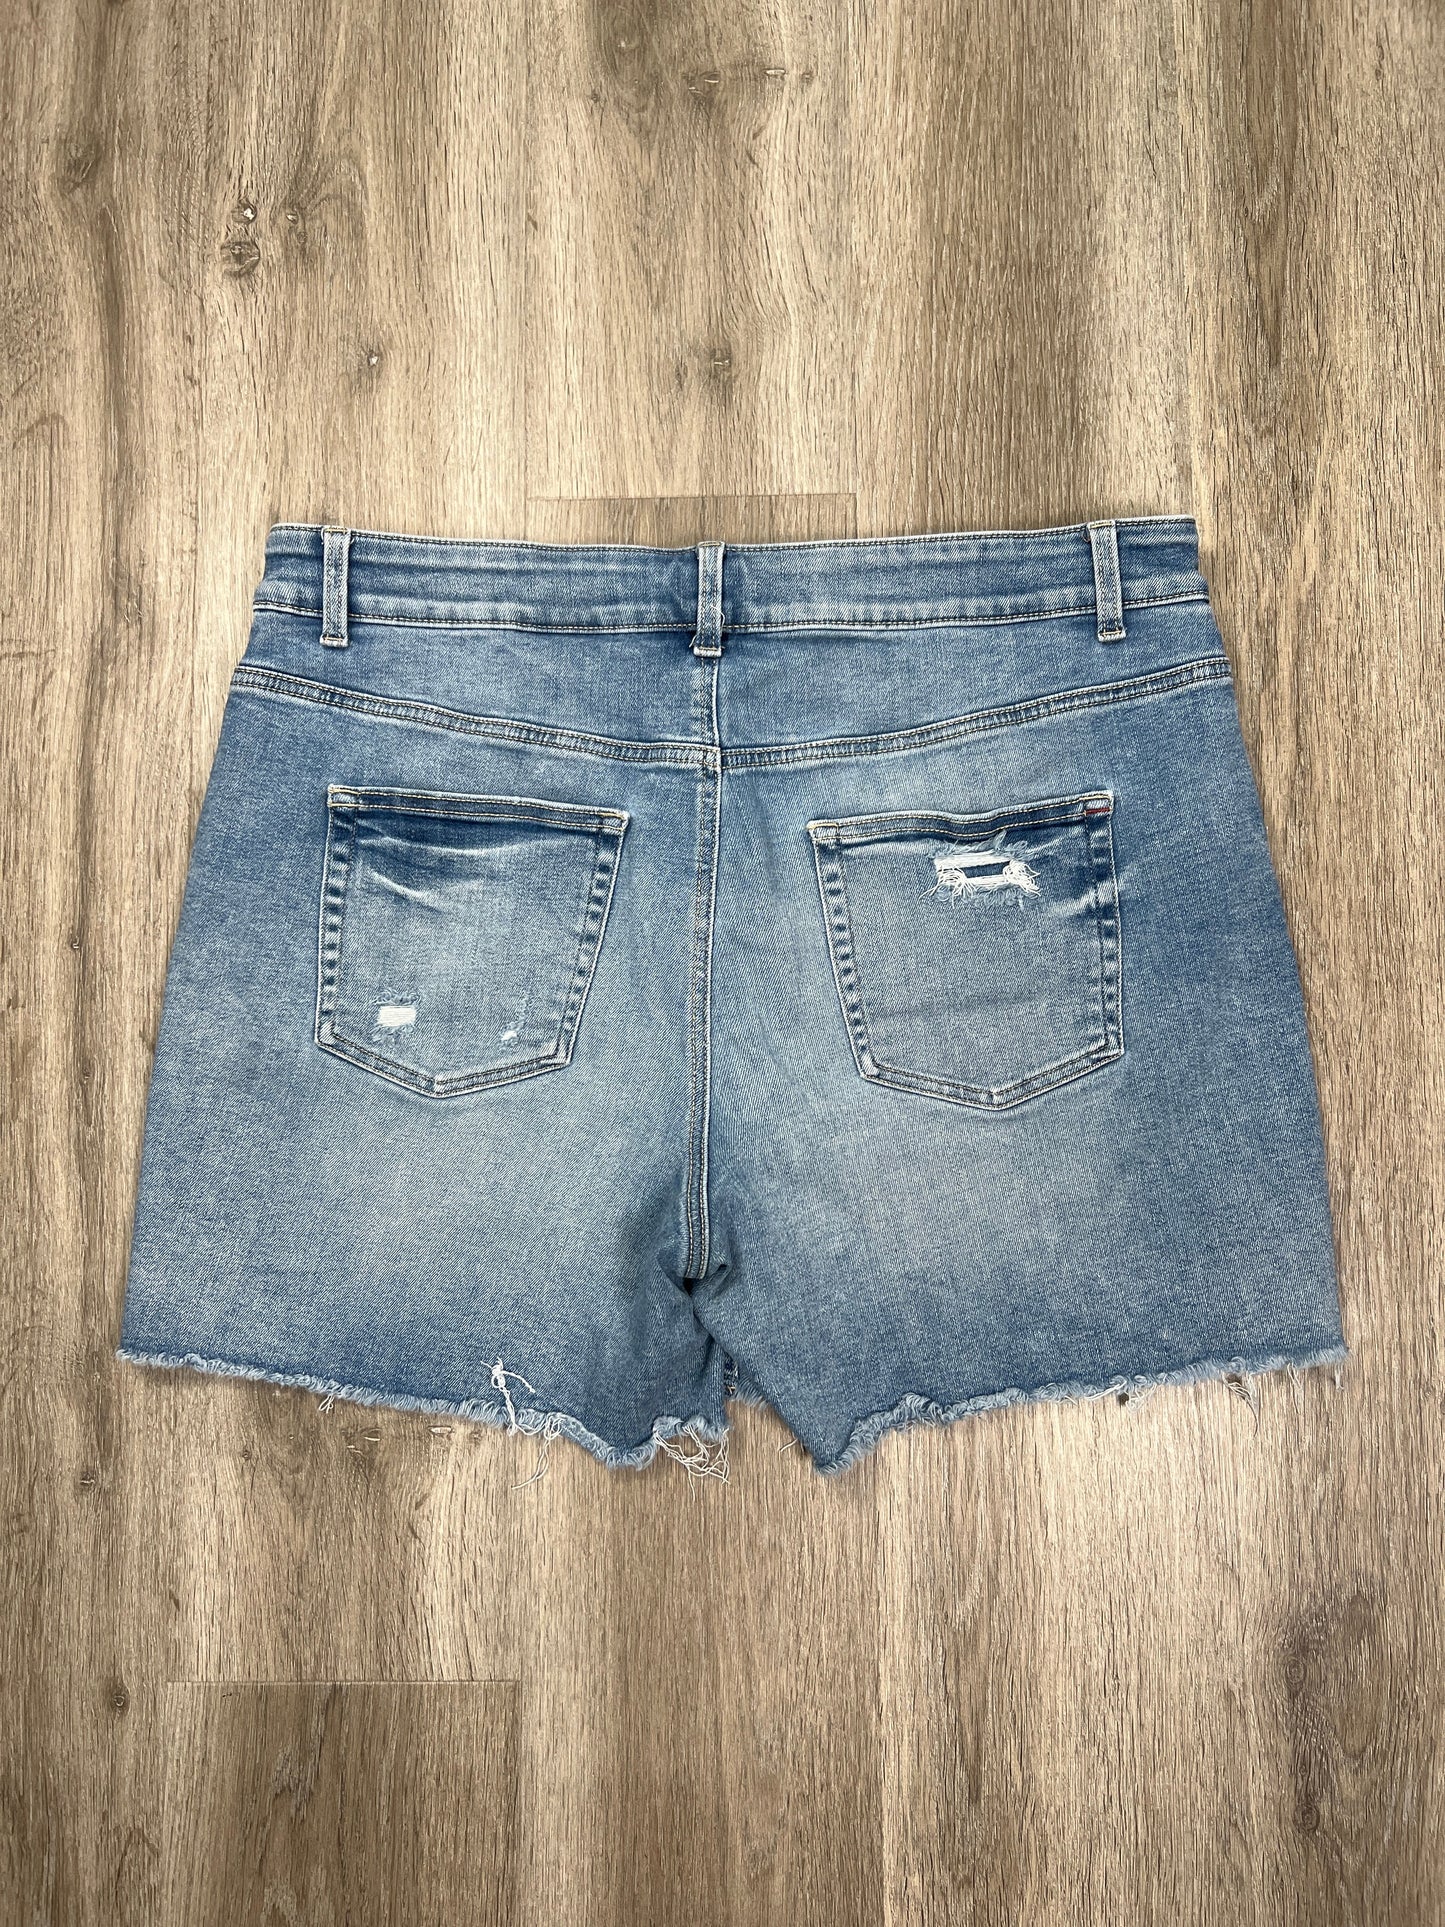 Blue Denim Shorts EDGELY,  Size Xl